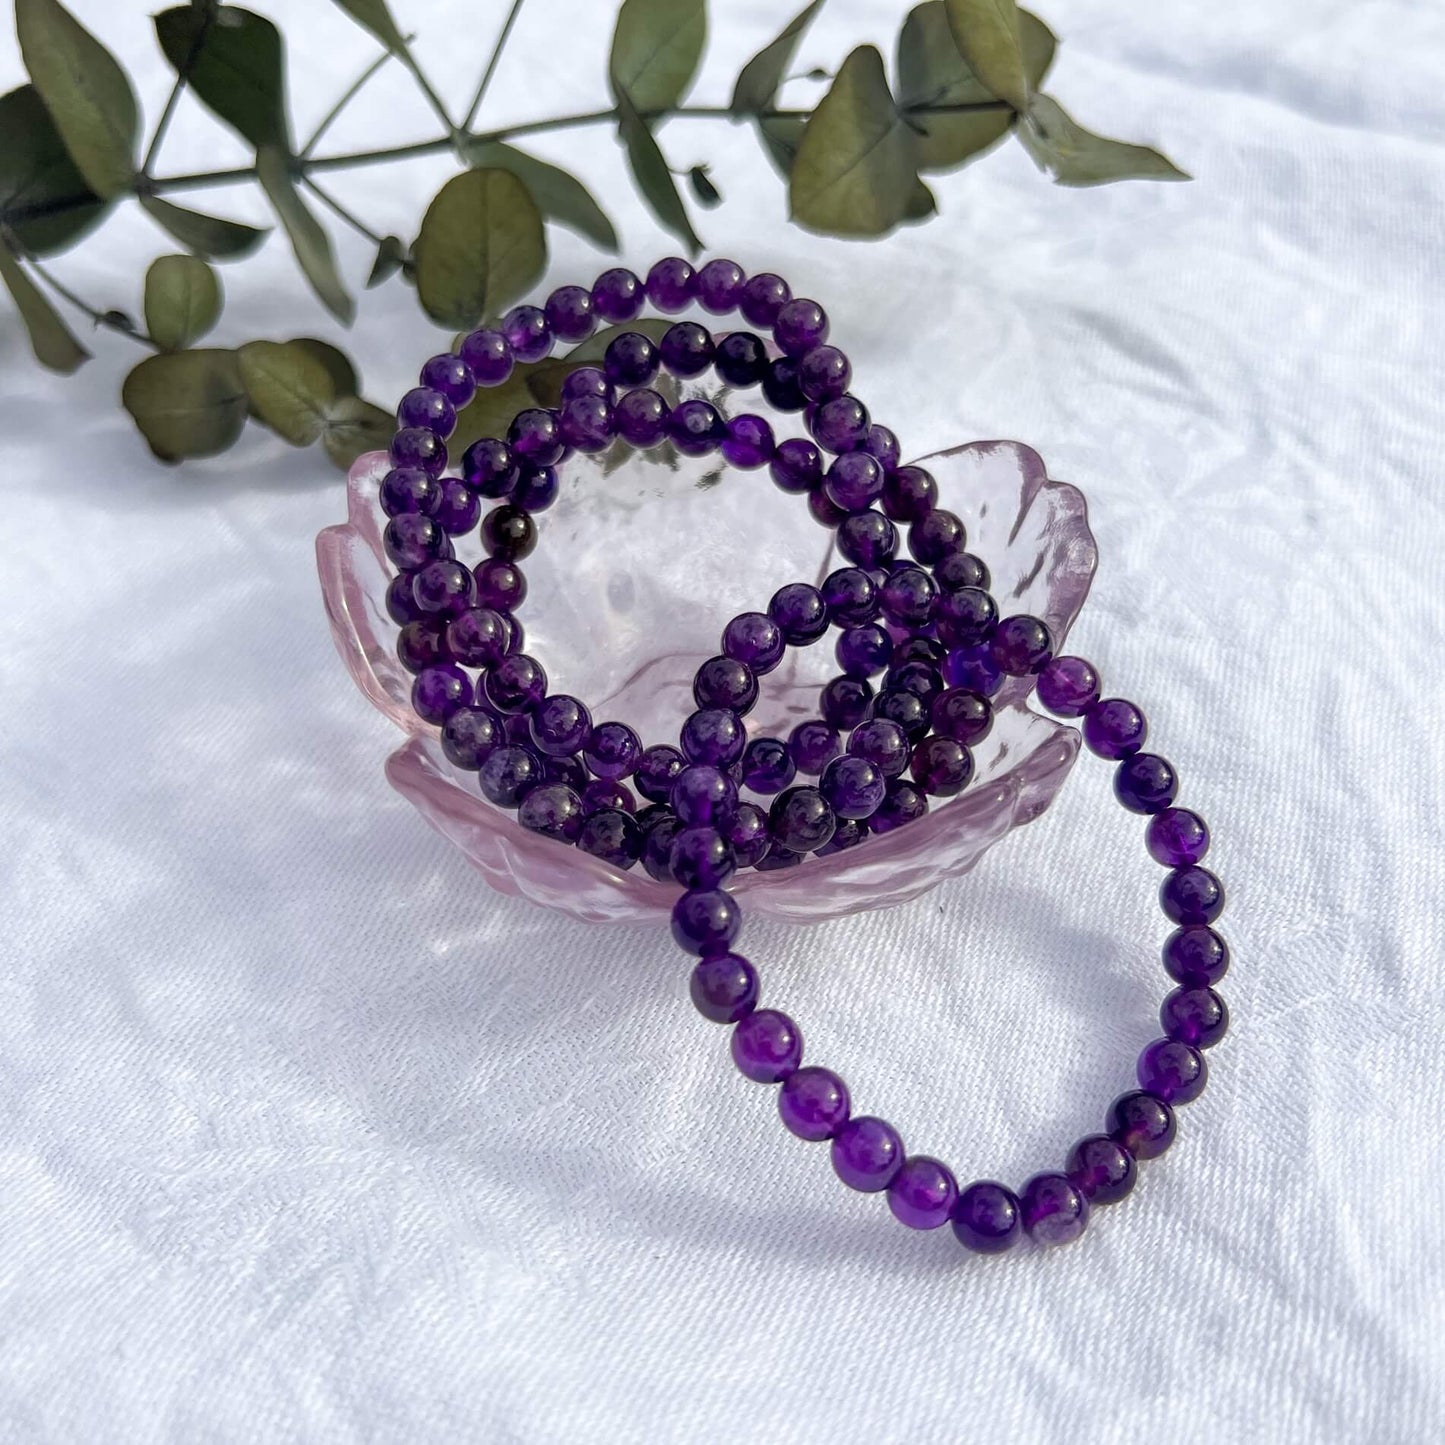 A pink glass dish full of bright purple amethyst crystal bead bracelets